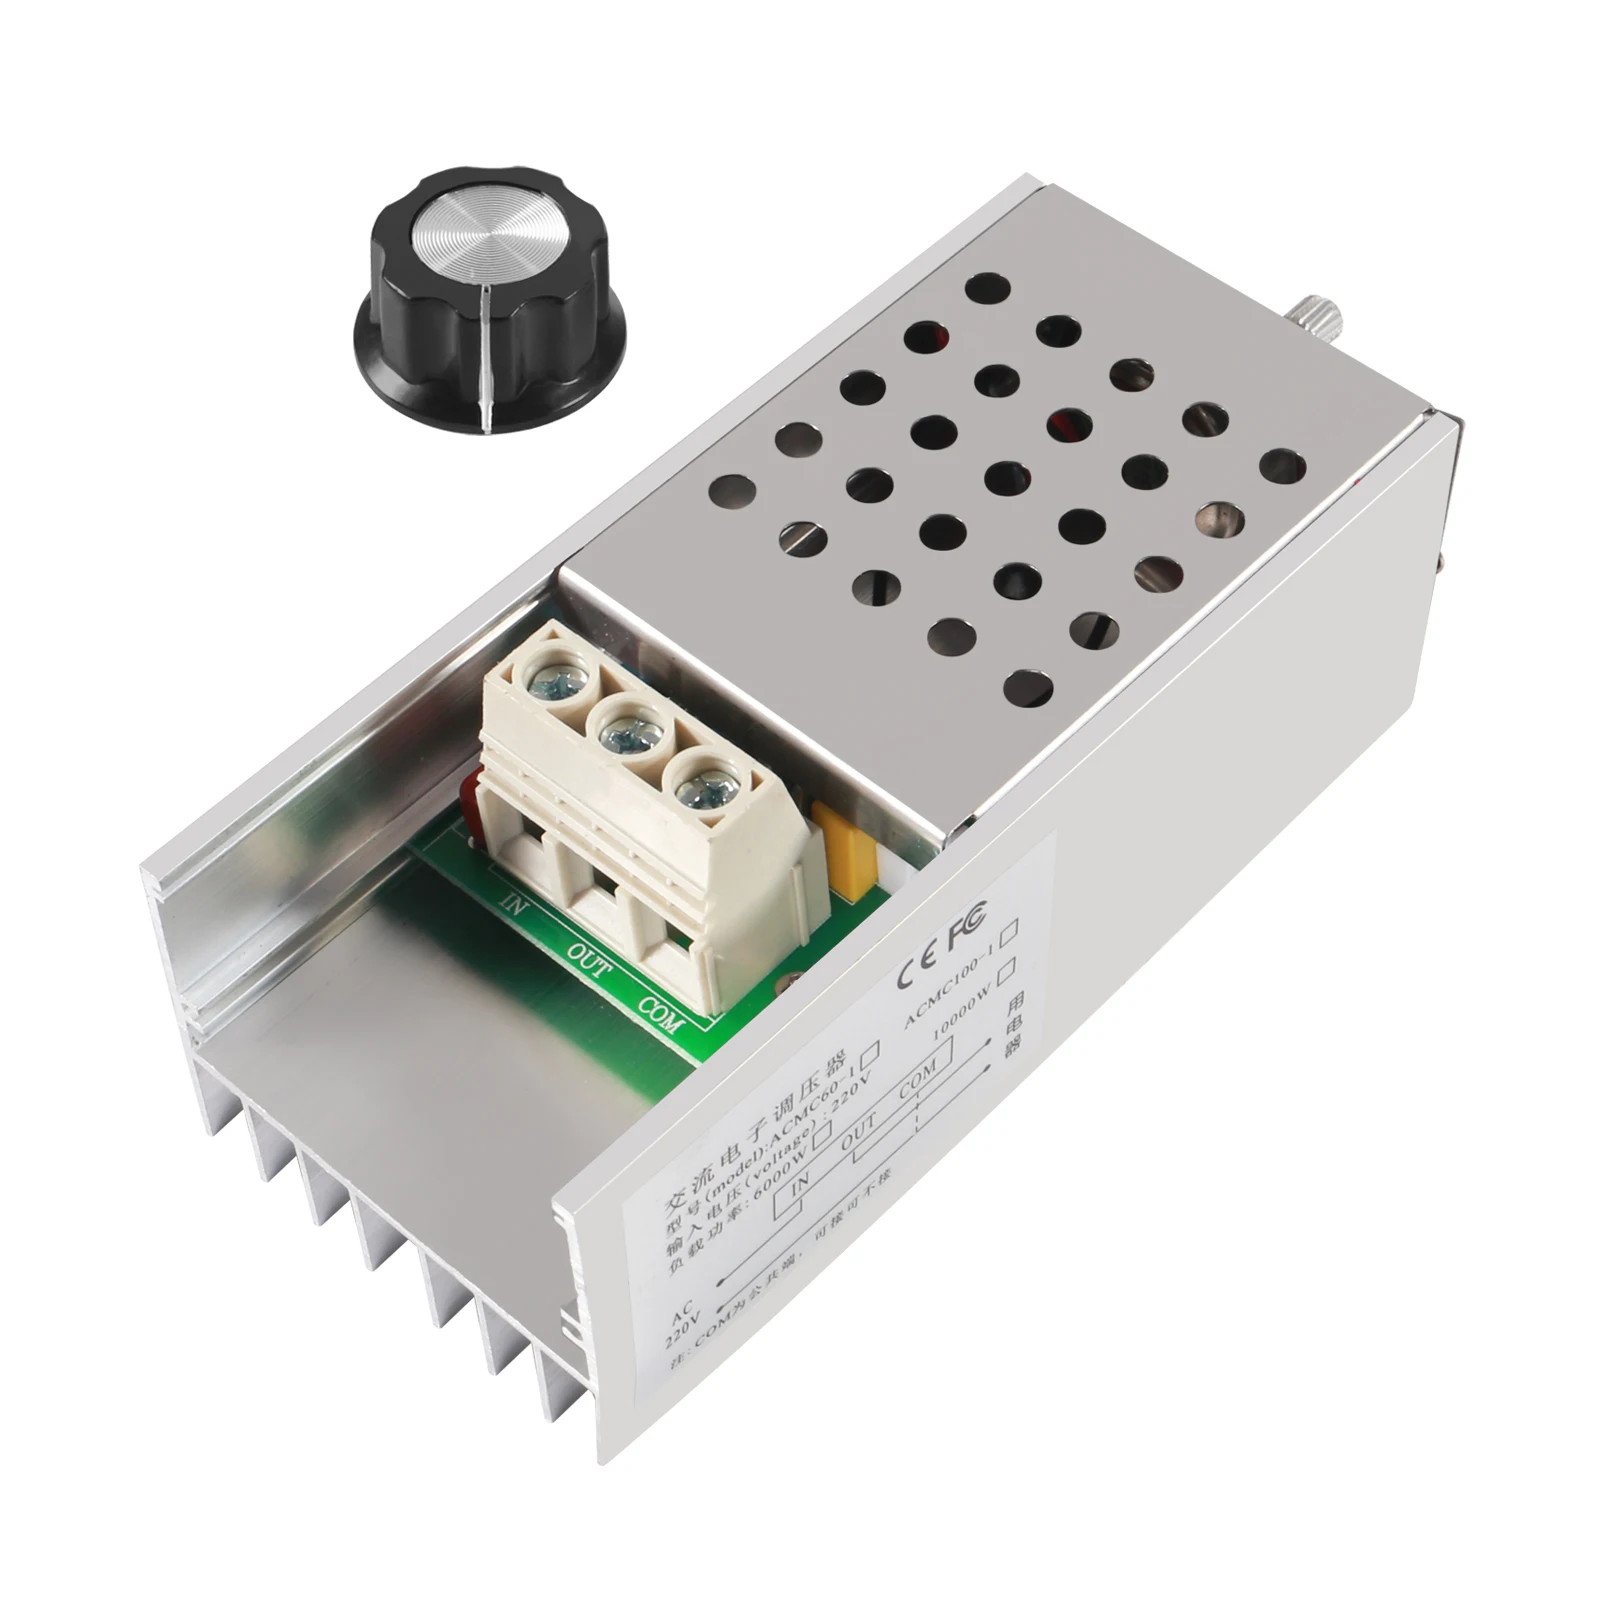 10000W SCR Voltage Regulator Motor Speed Controller Dimmer Thermostat AC110-220V 